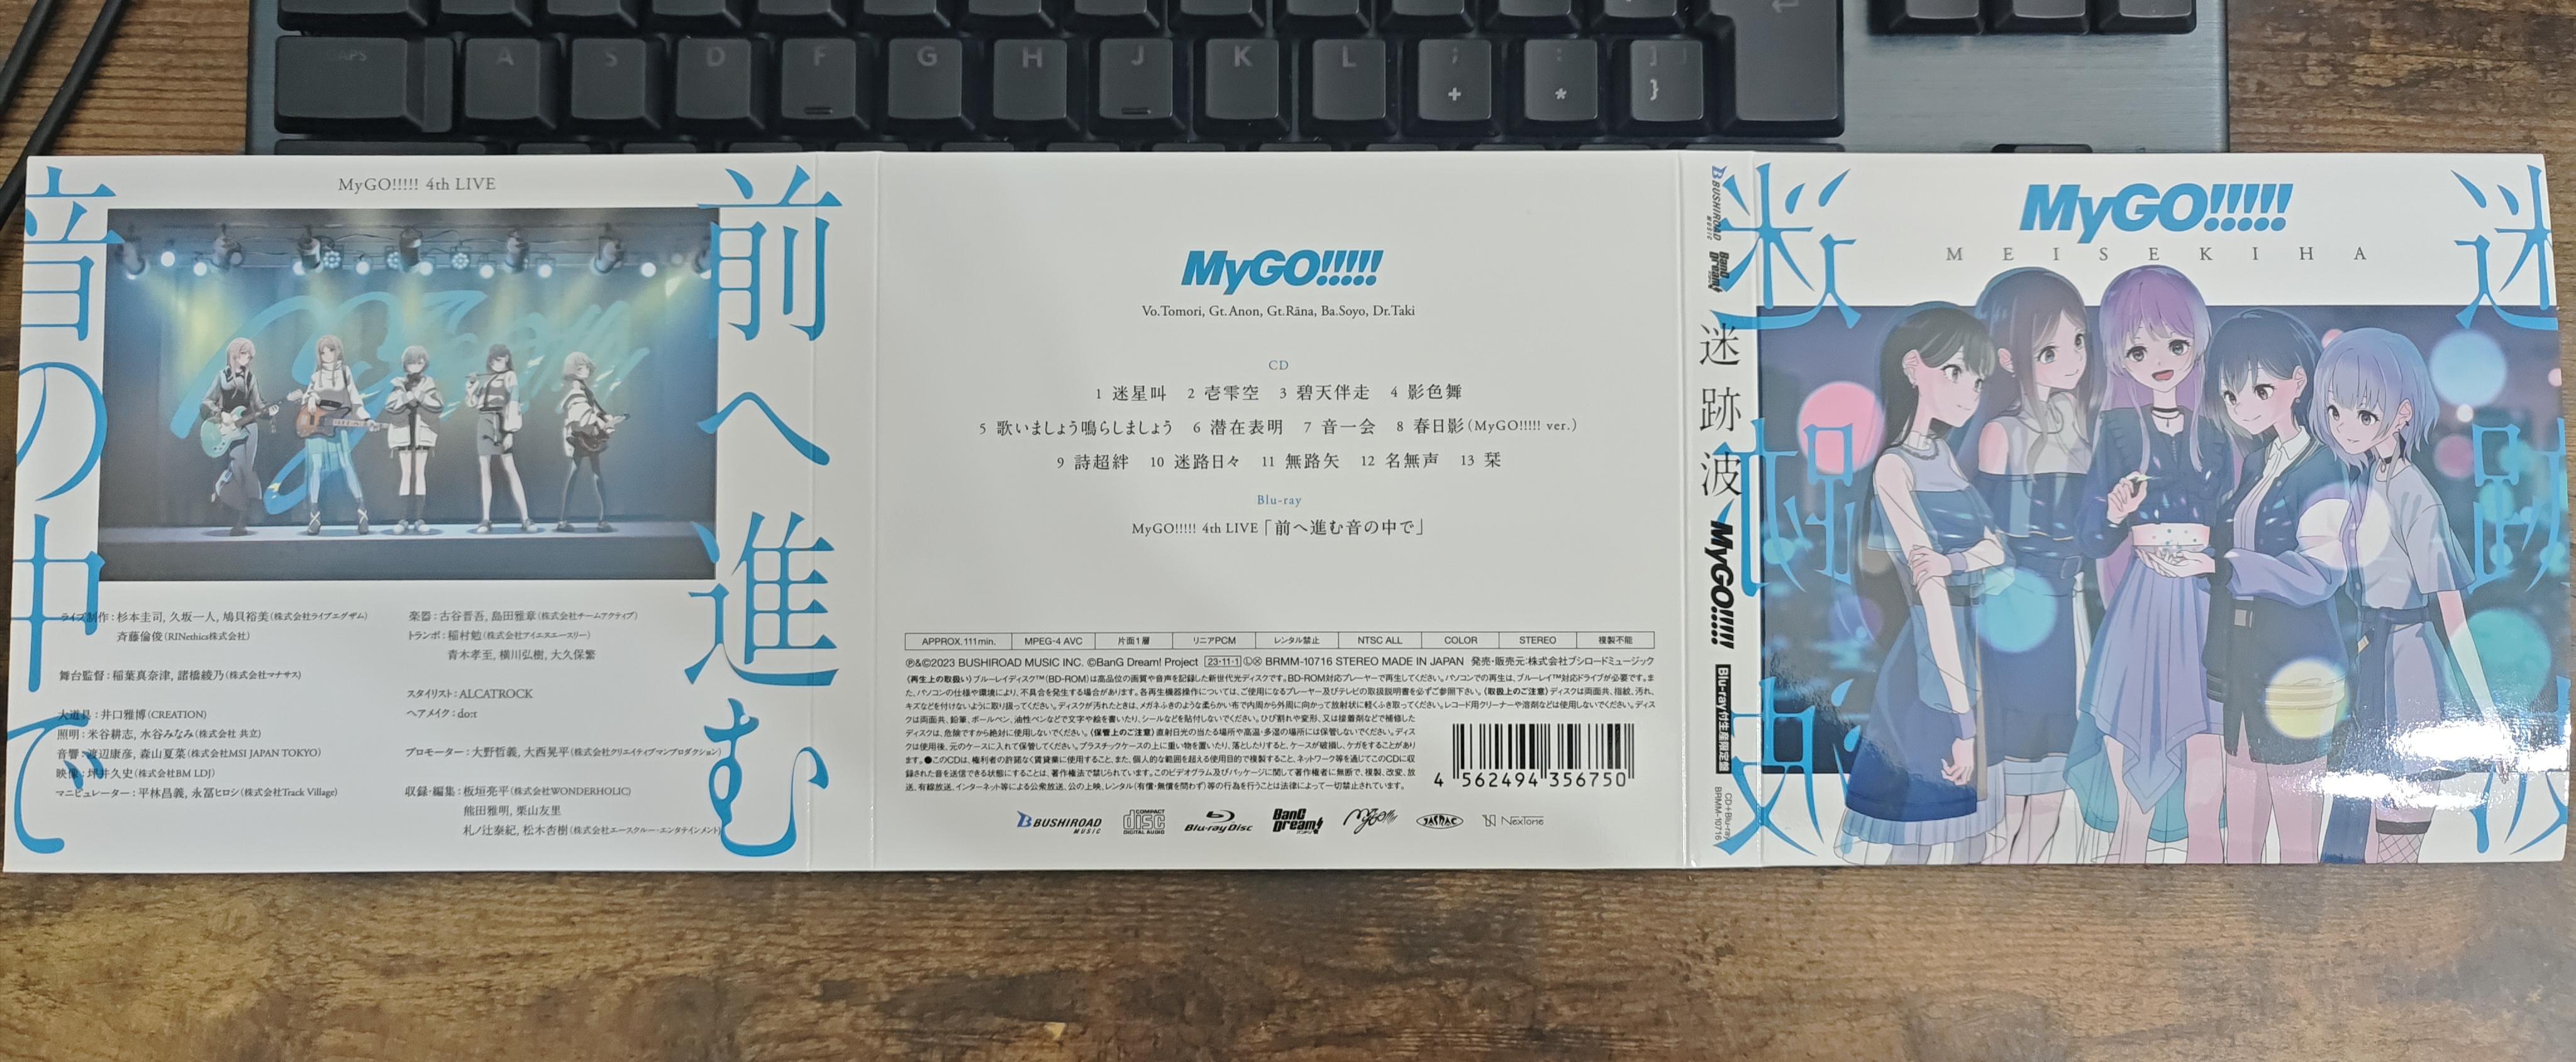 影色舞 — MyGO!!!!!